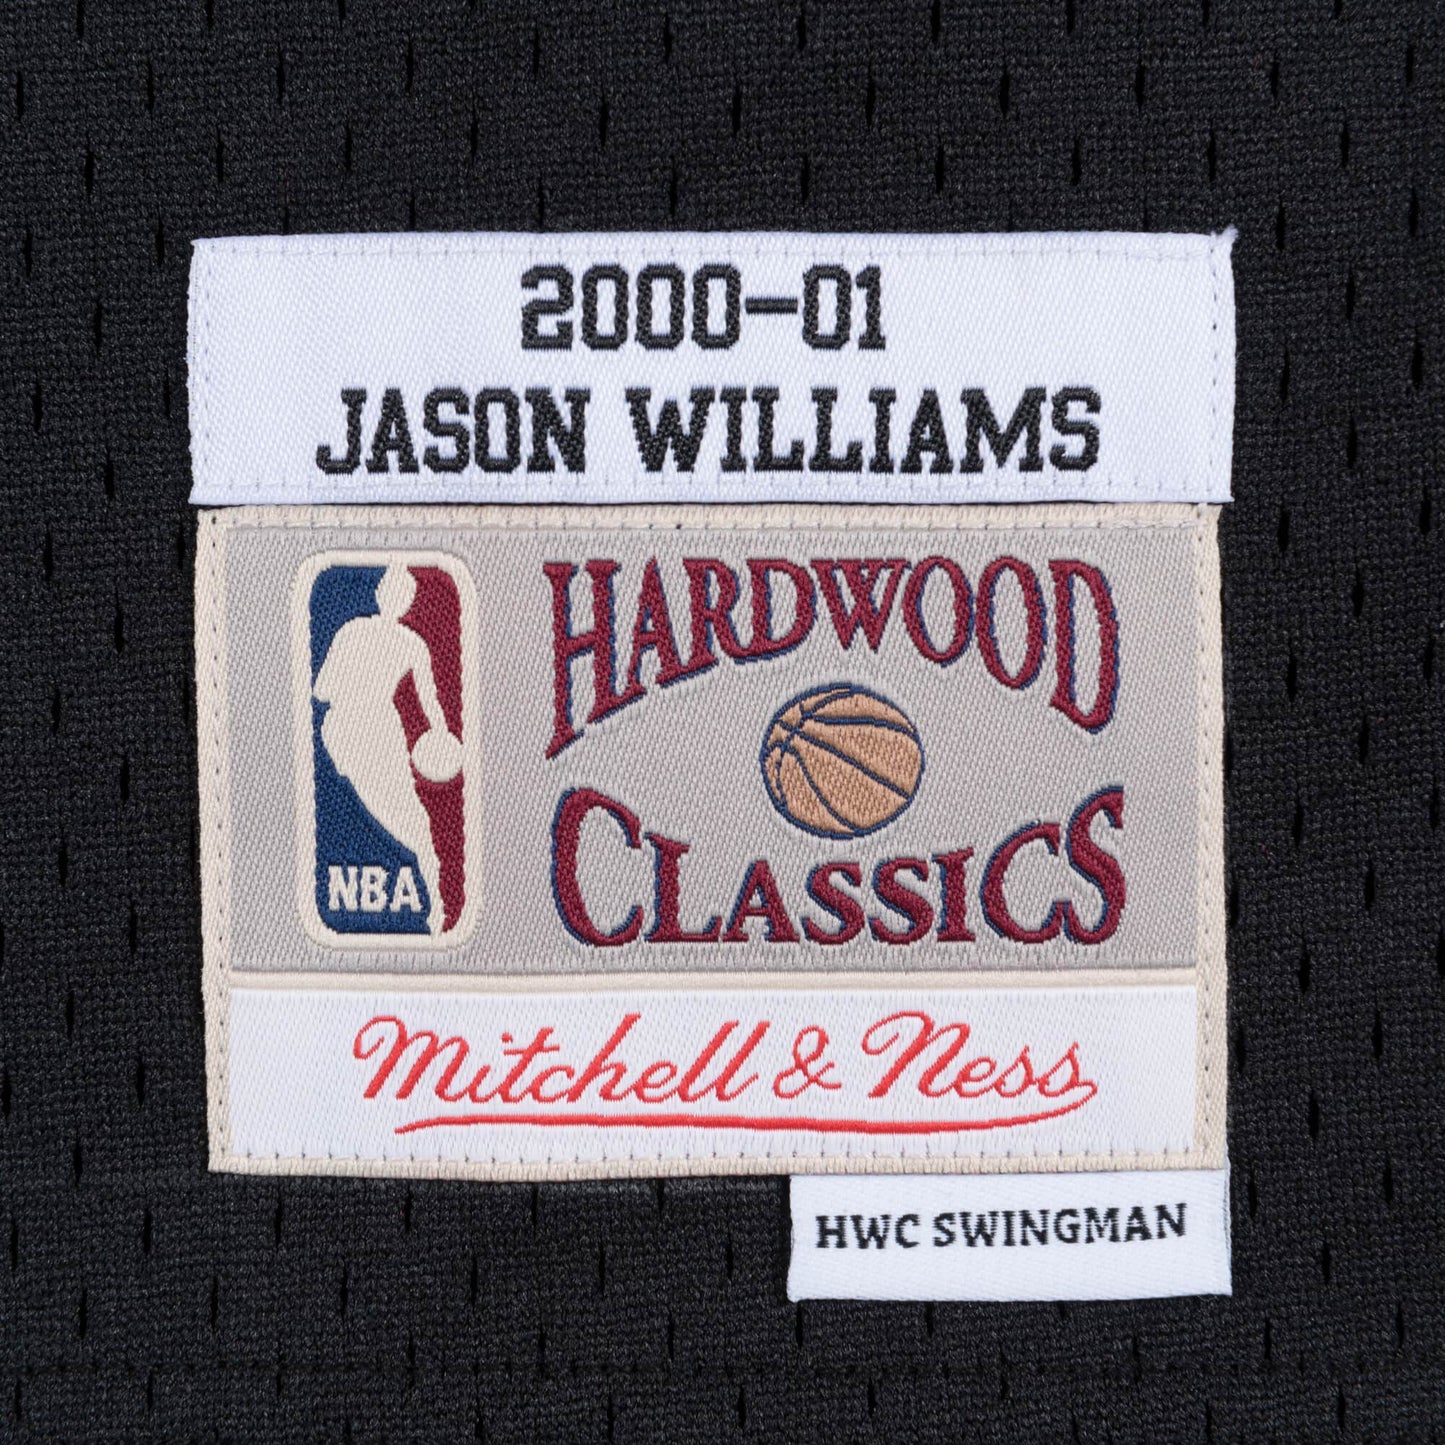 JASON WILLIAMS MEN'S MITCHELL & NESS 00-01' SWINGMAN JERSEY